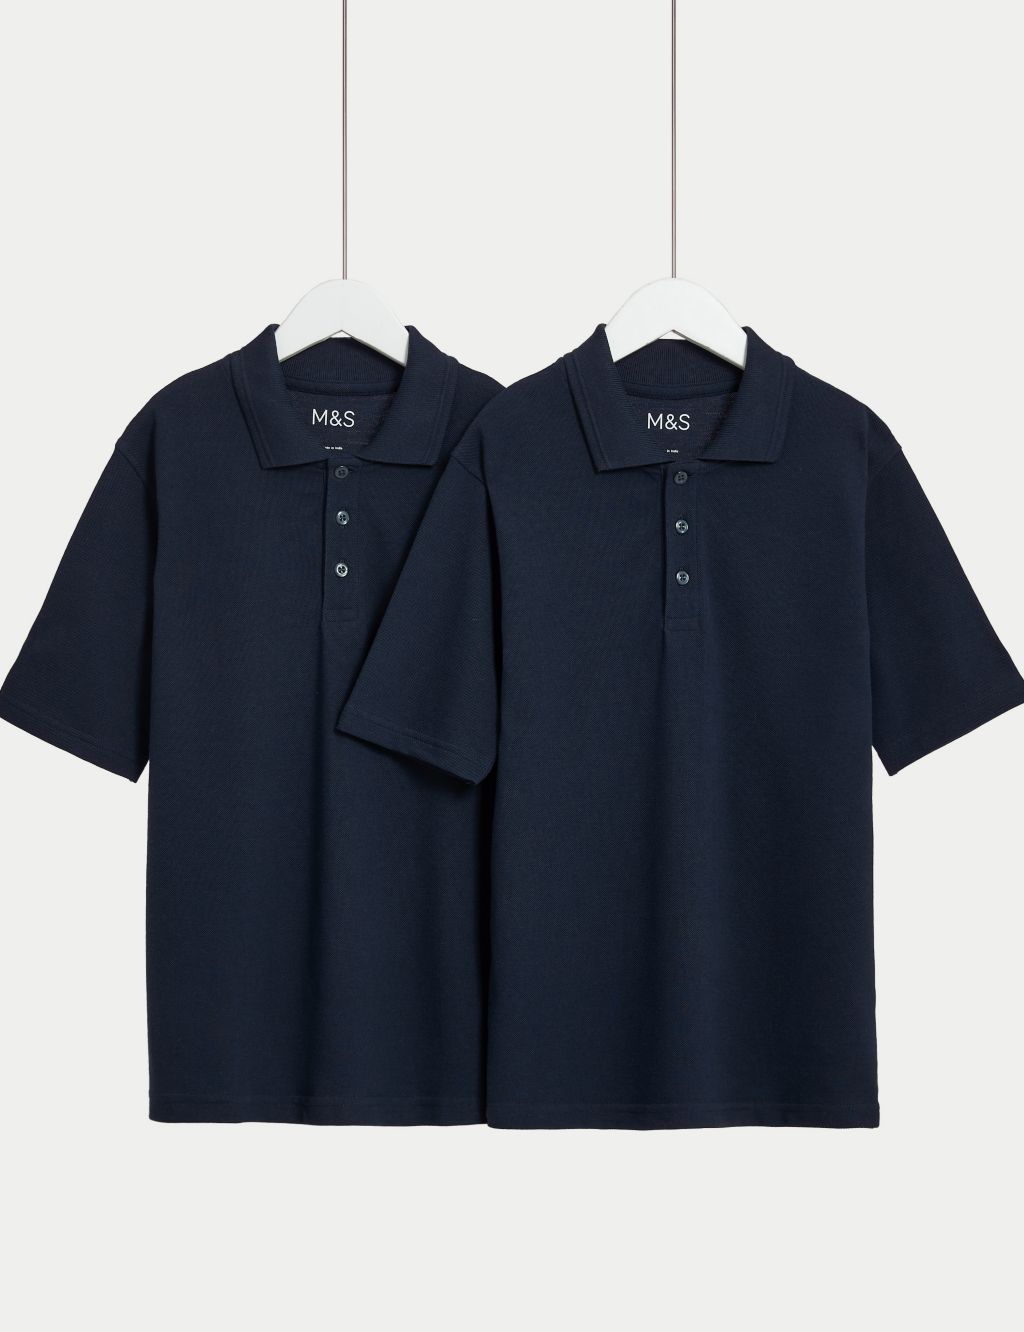 Navy School Polo Shirts M&S | M&S